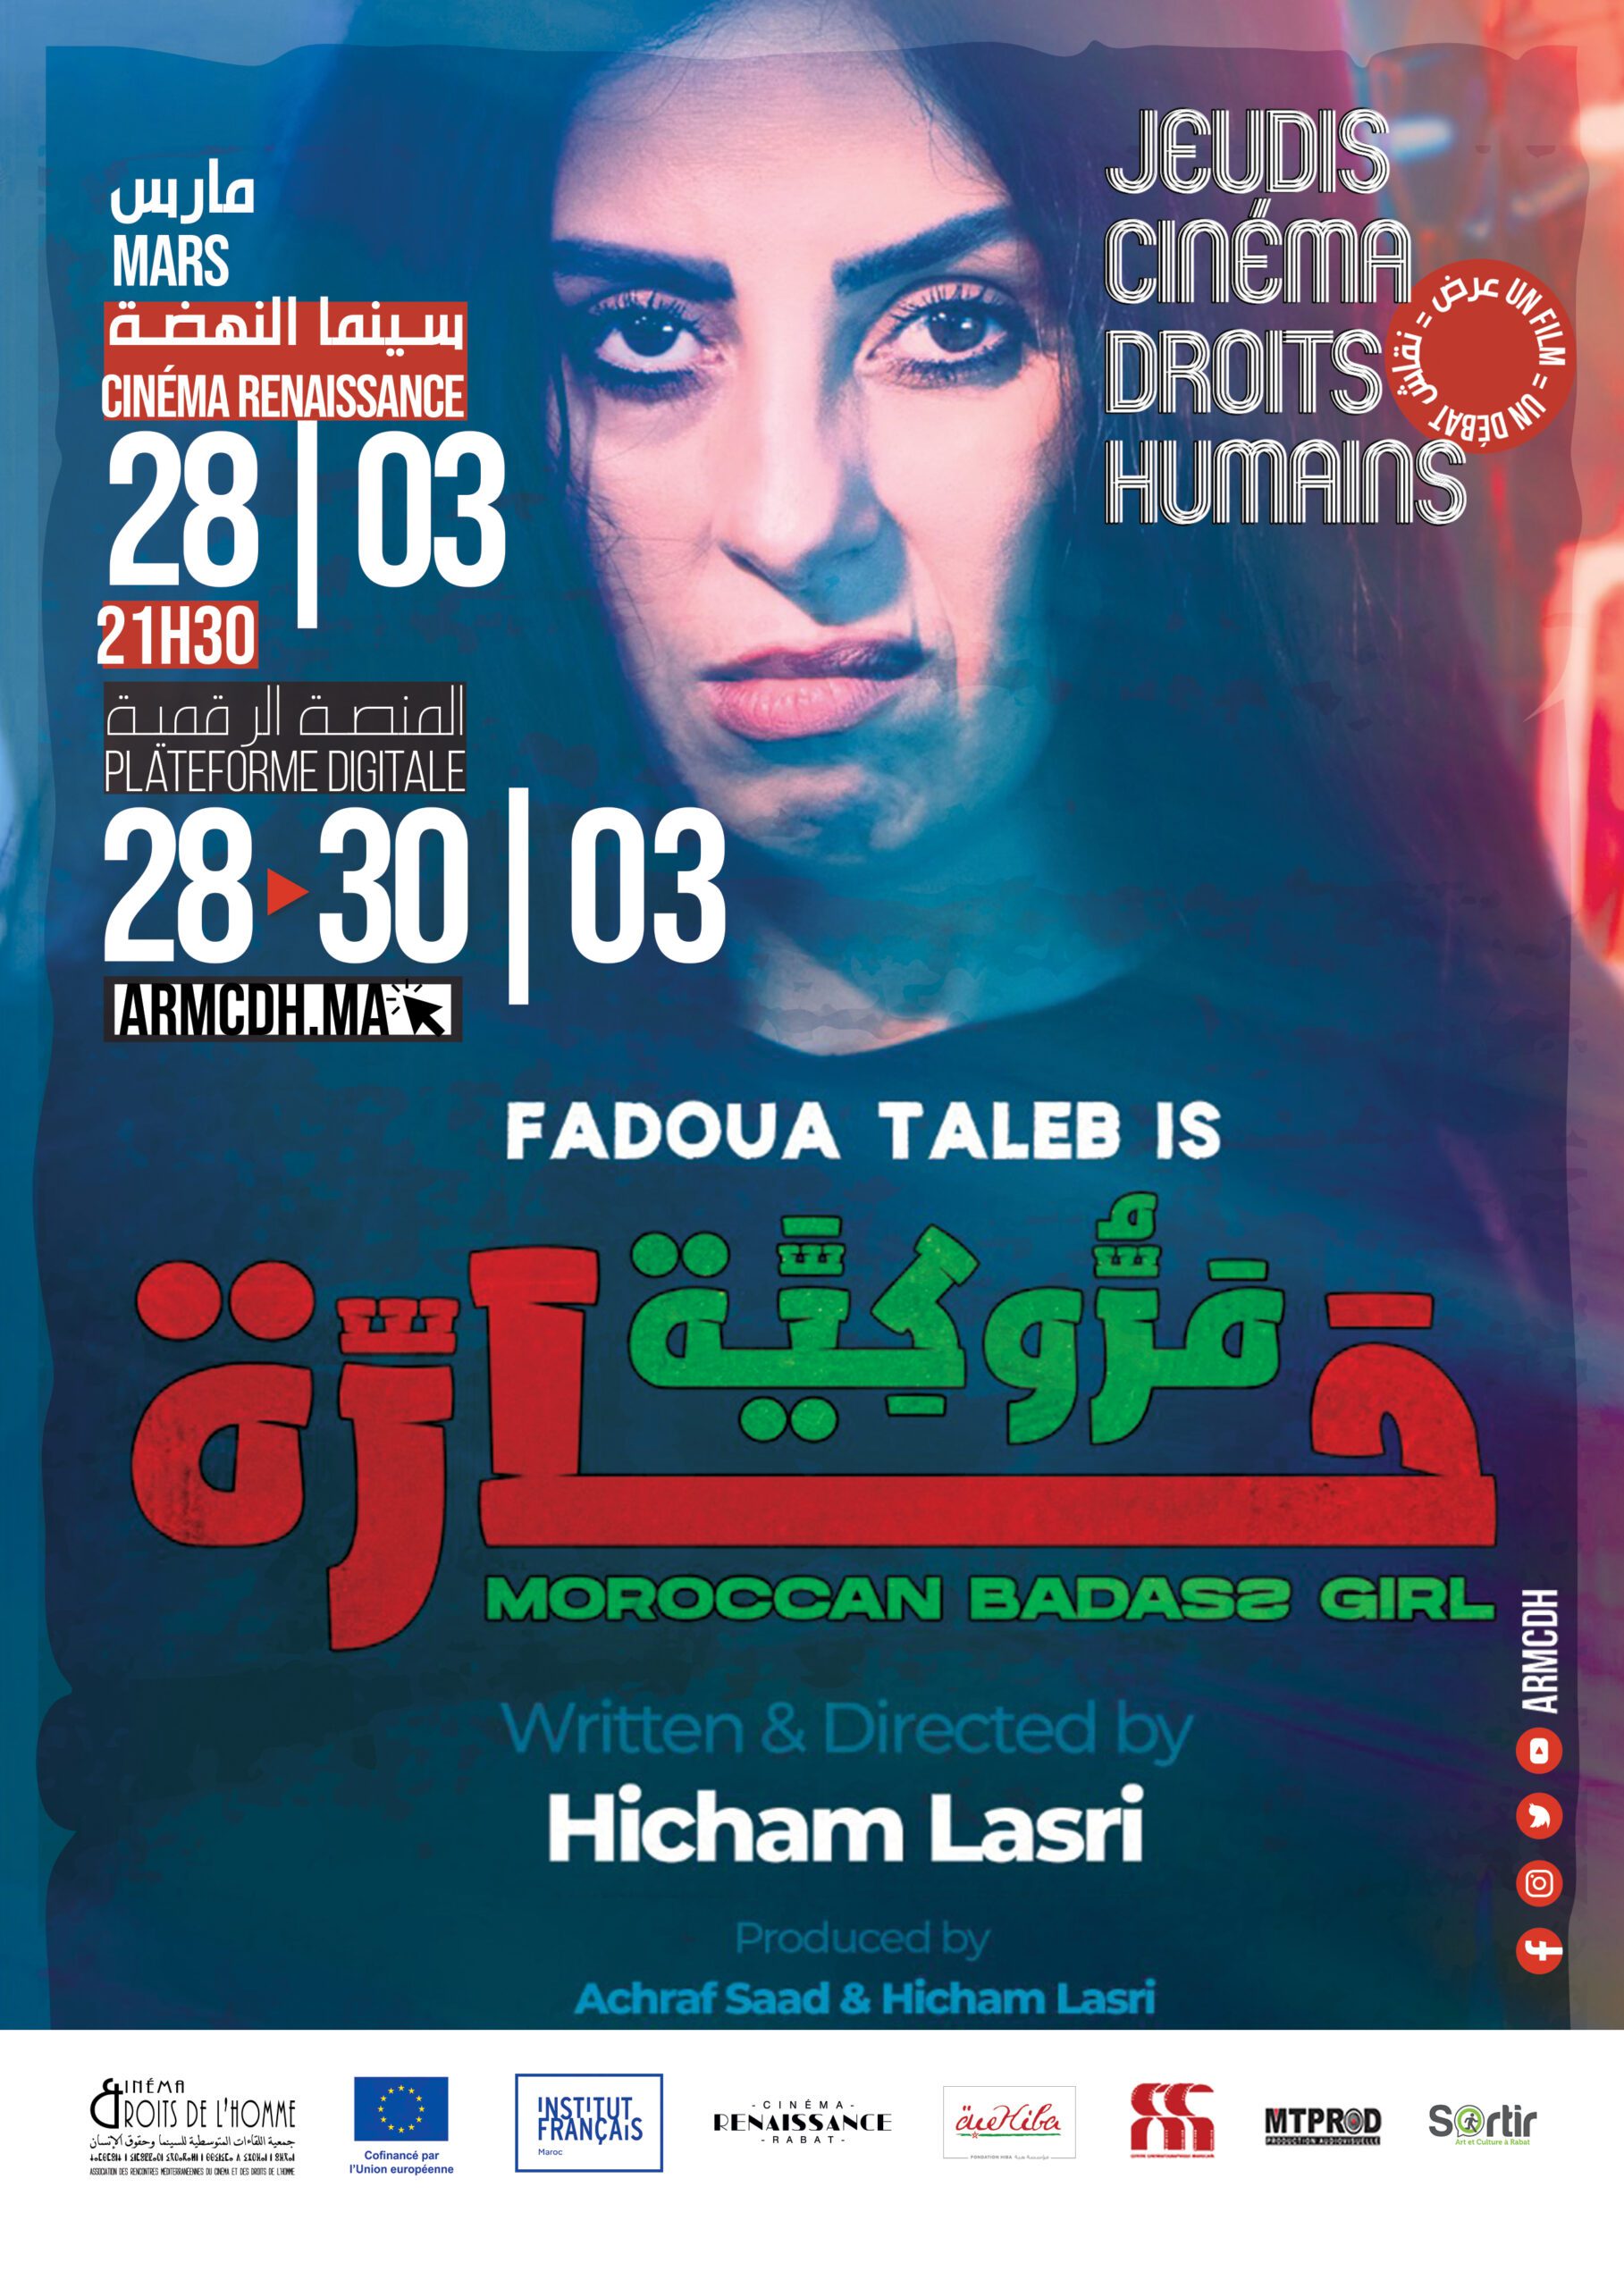 Hicham Lasri Moroccan Badass Girl